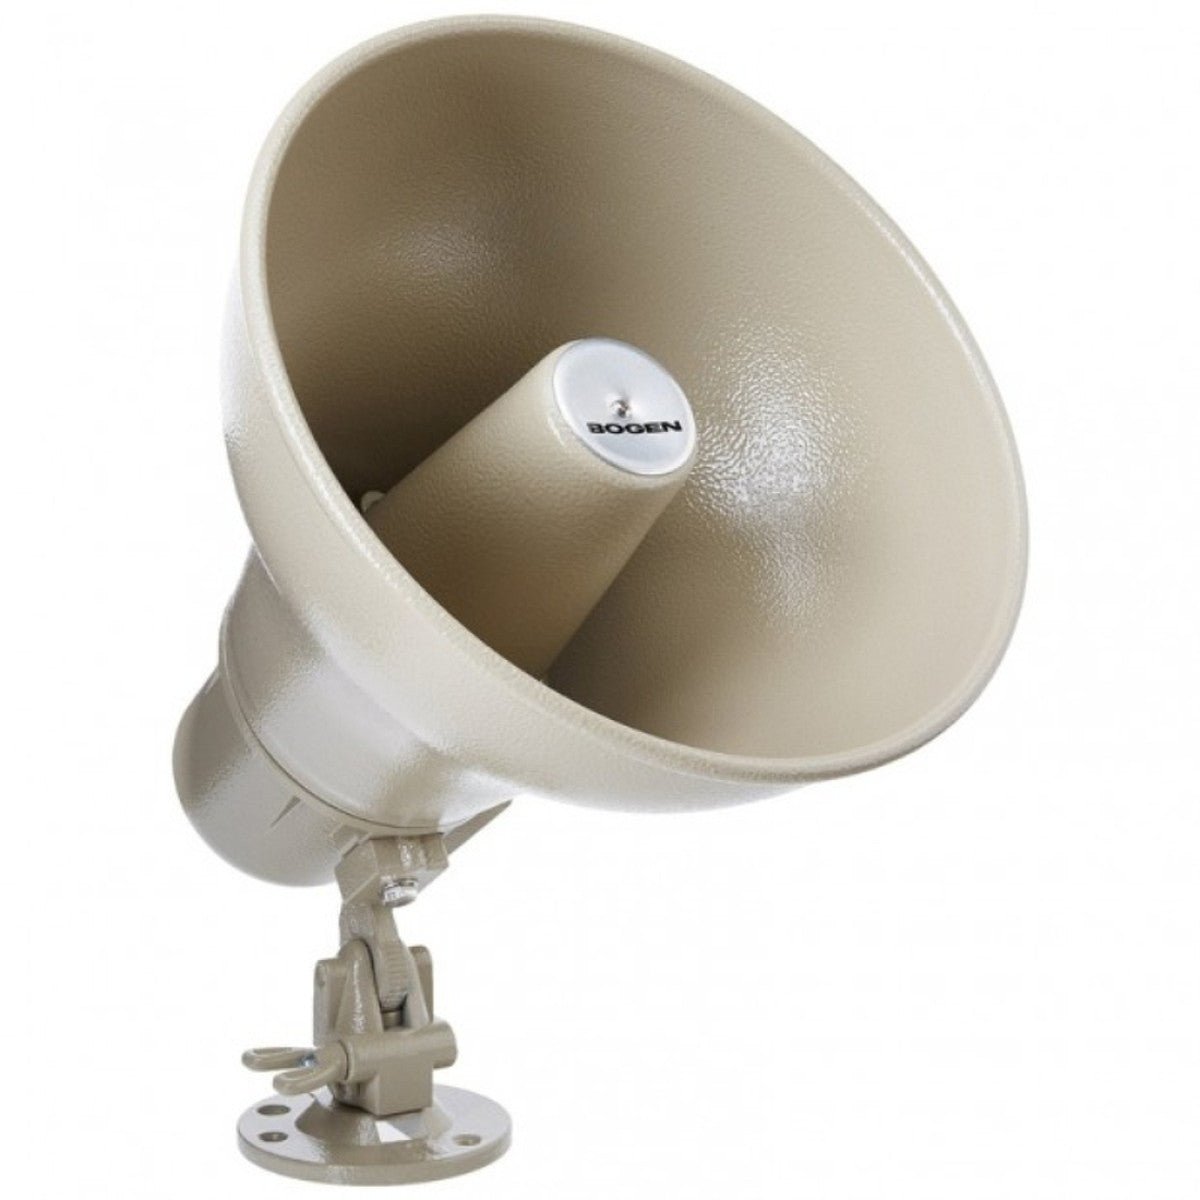 Bogen AH15A Horn Speaker | New